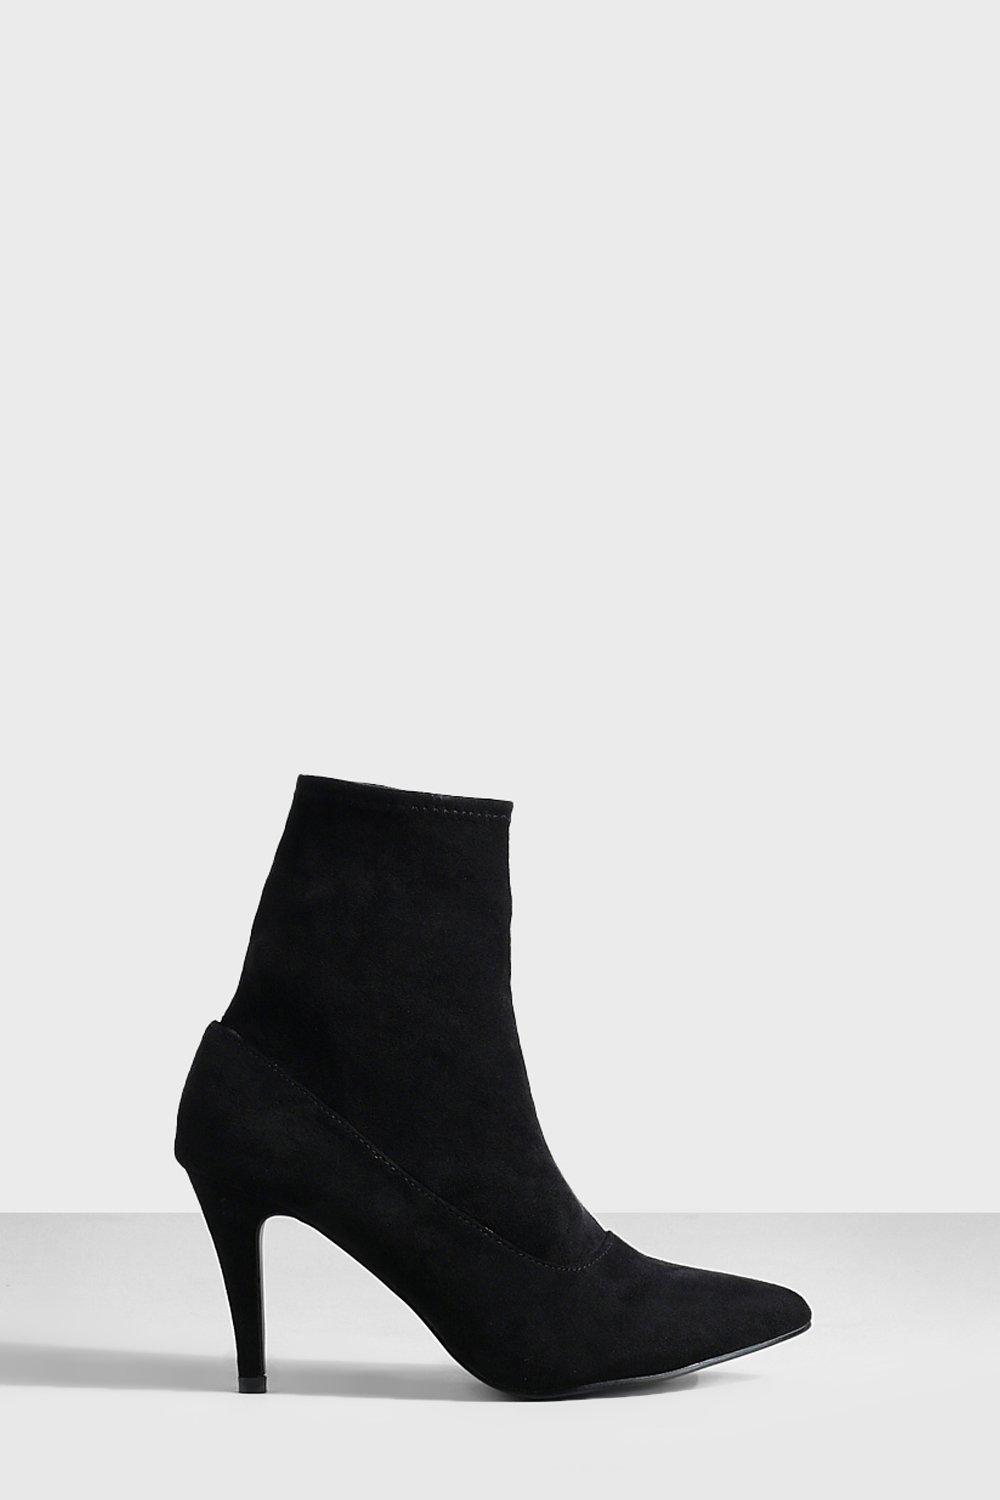 black high heels canada